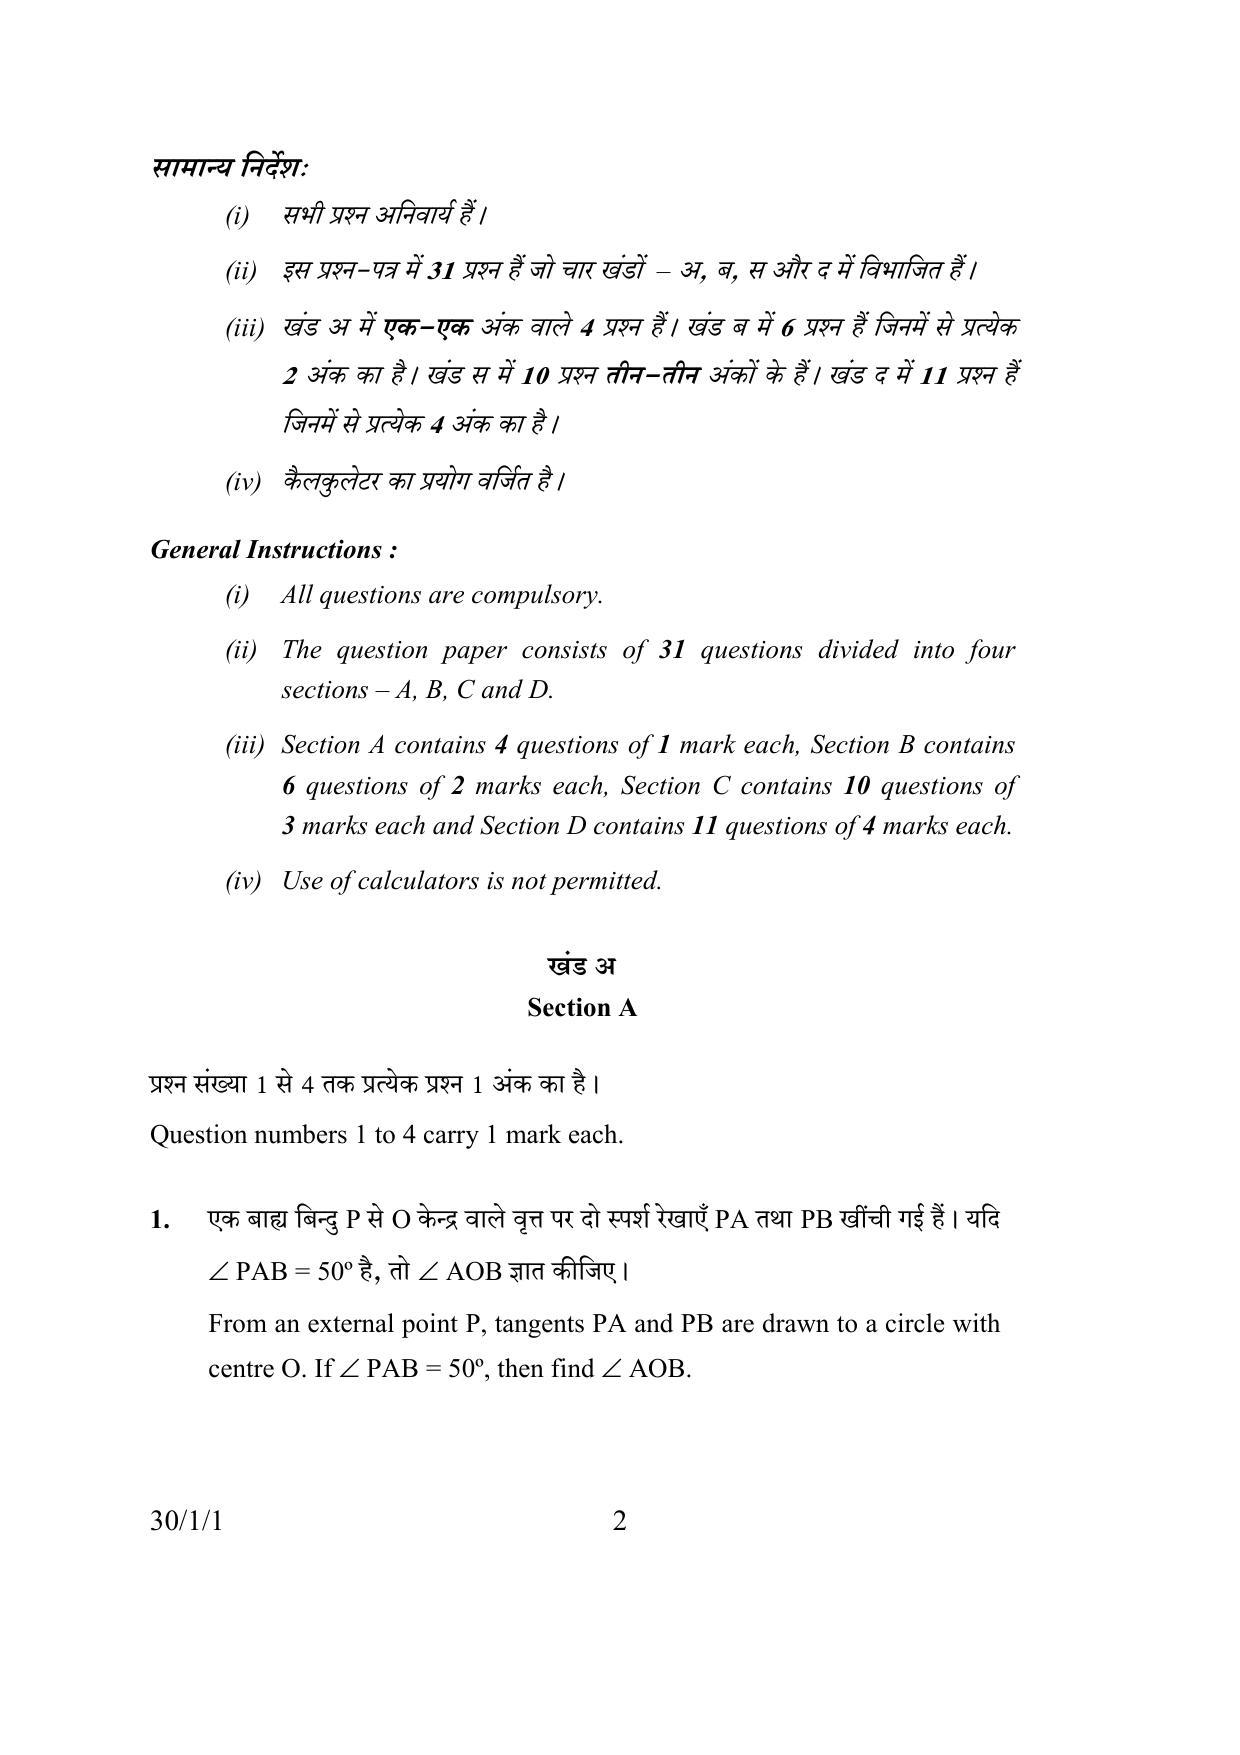 CBSE Class 10 30-1-1 MATHEMATICS 2016 Question Paper - Page 2